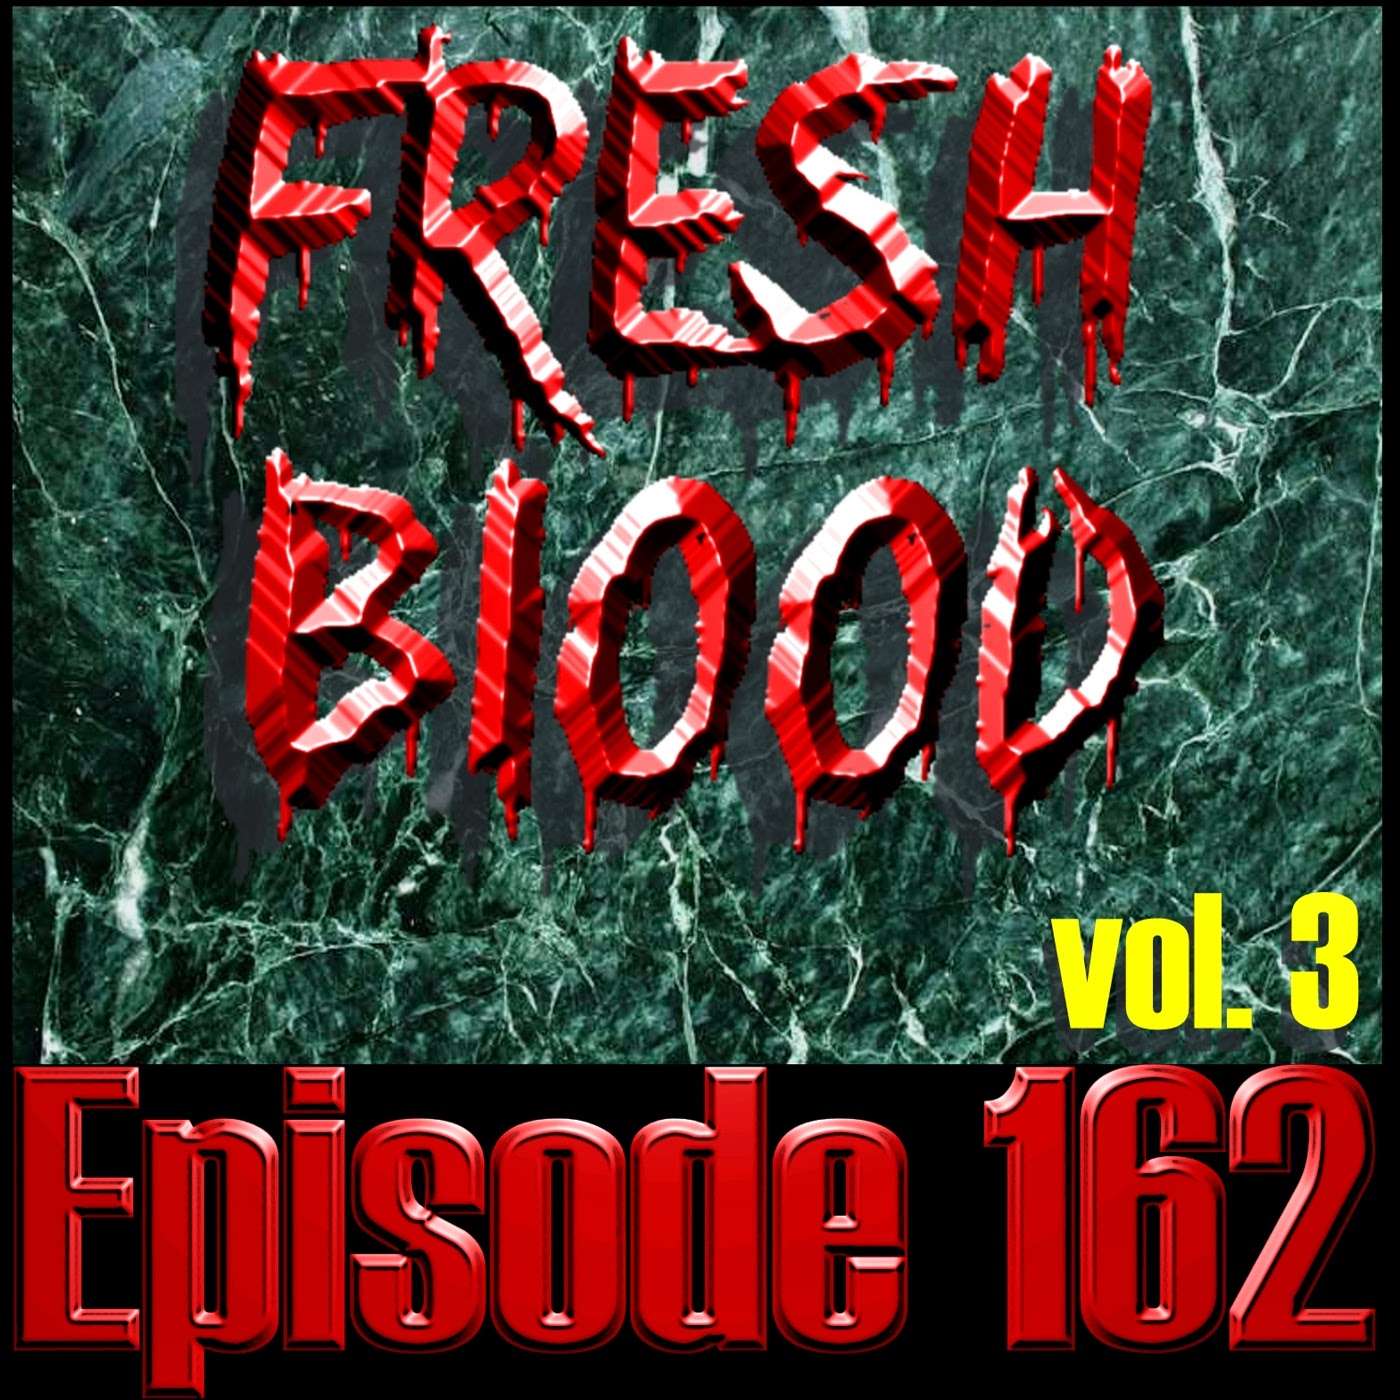 Fresh Blood Volume Ep Decibel Geek Hard Rock And Heavy Metal Discussion